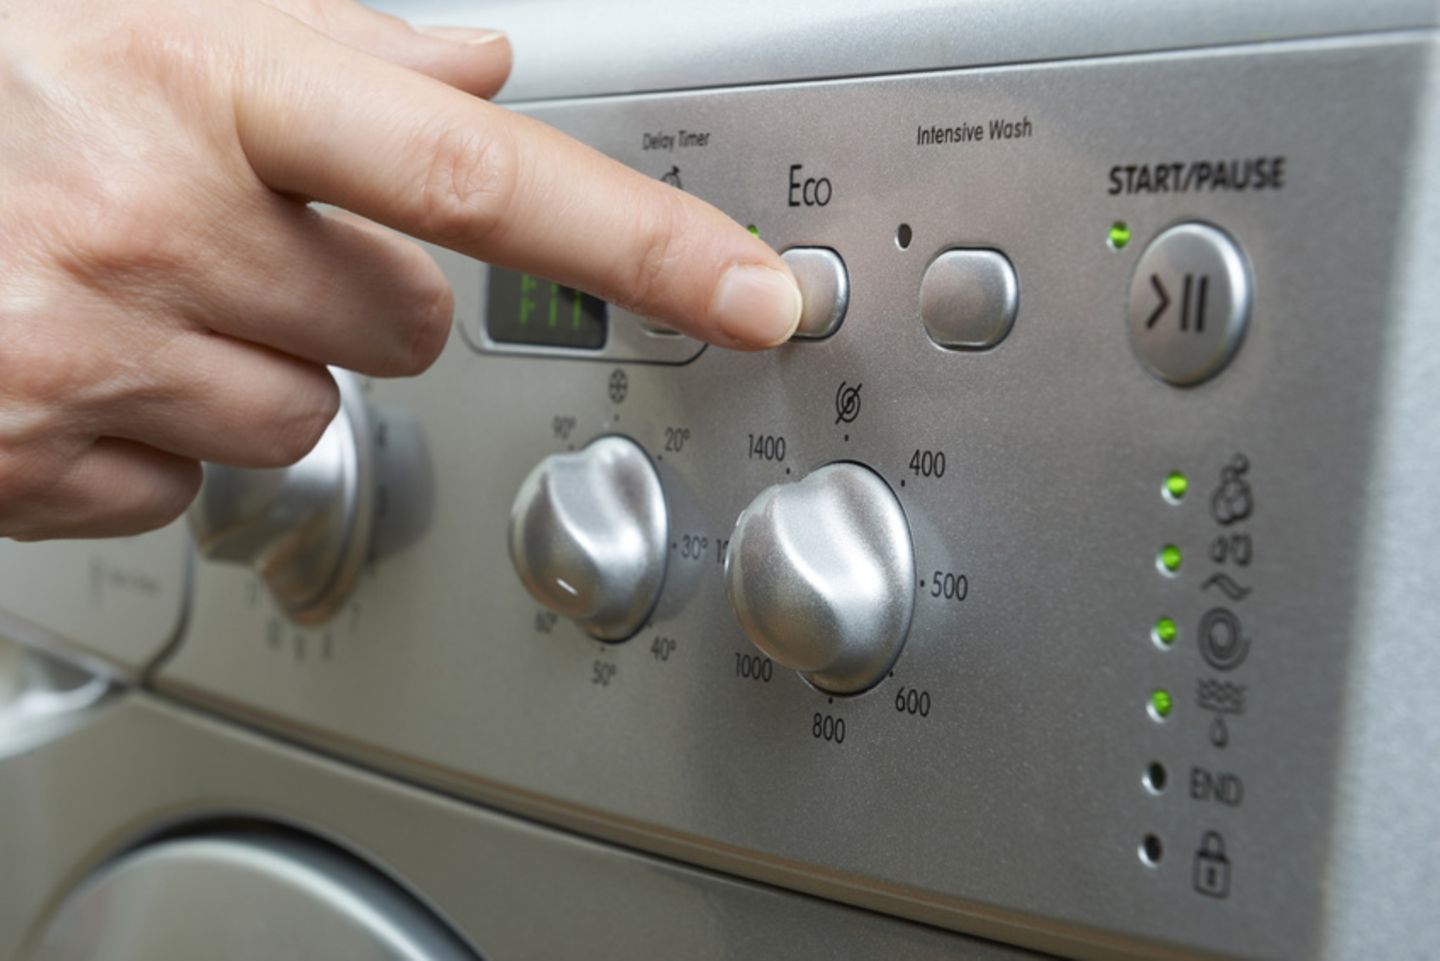 Eco-Knopf an der Waschmaschine wird gedrückt